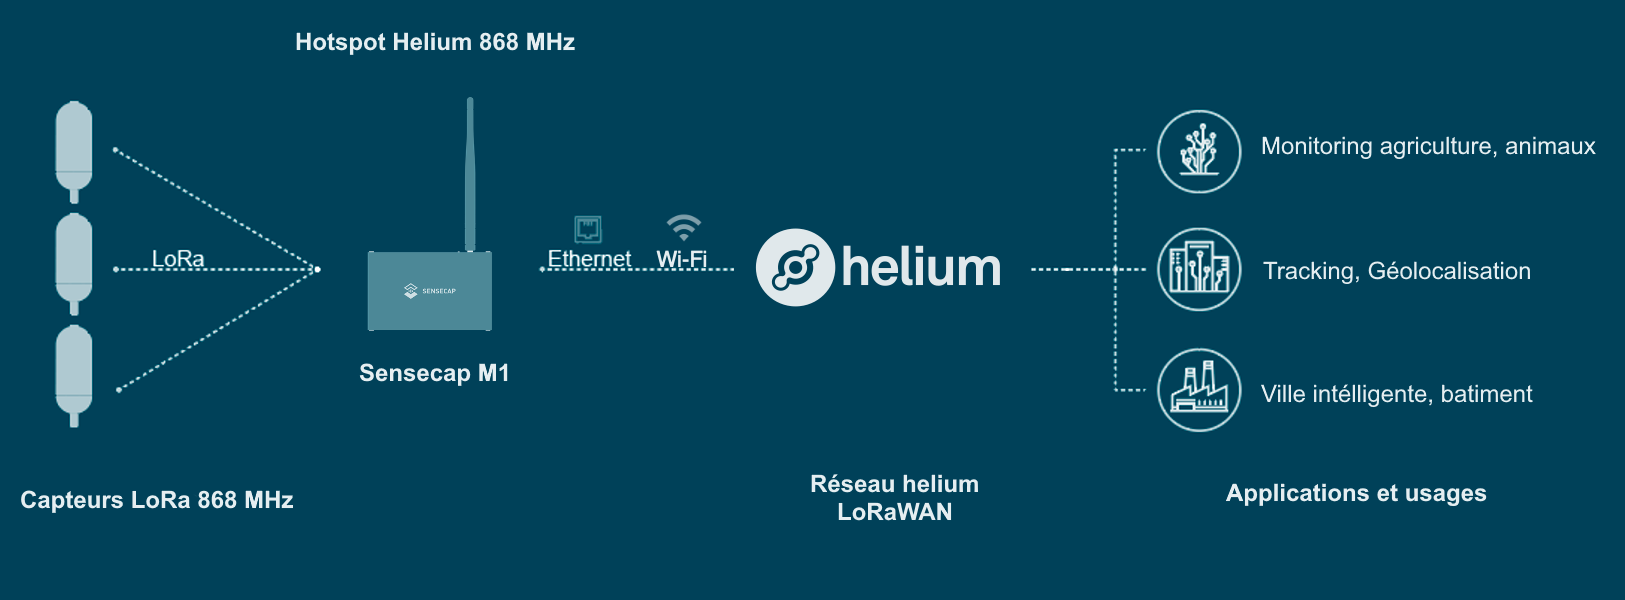 reseau-helium